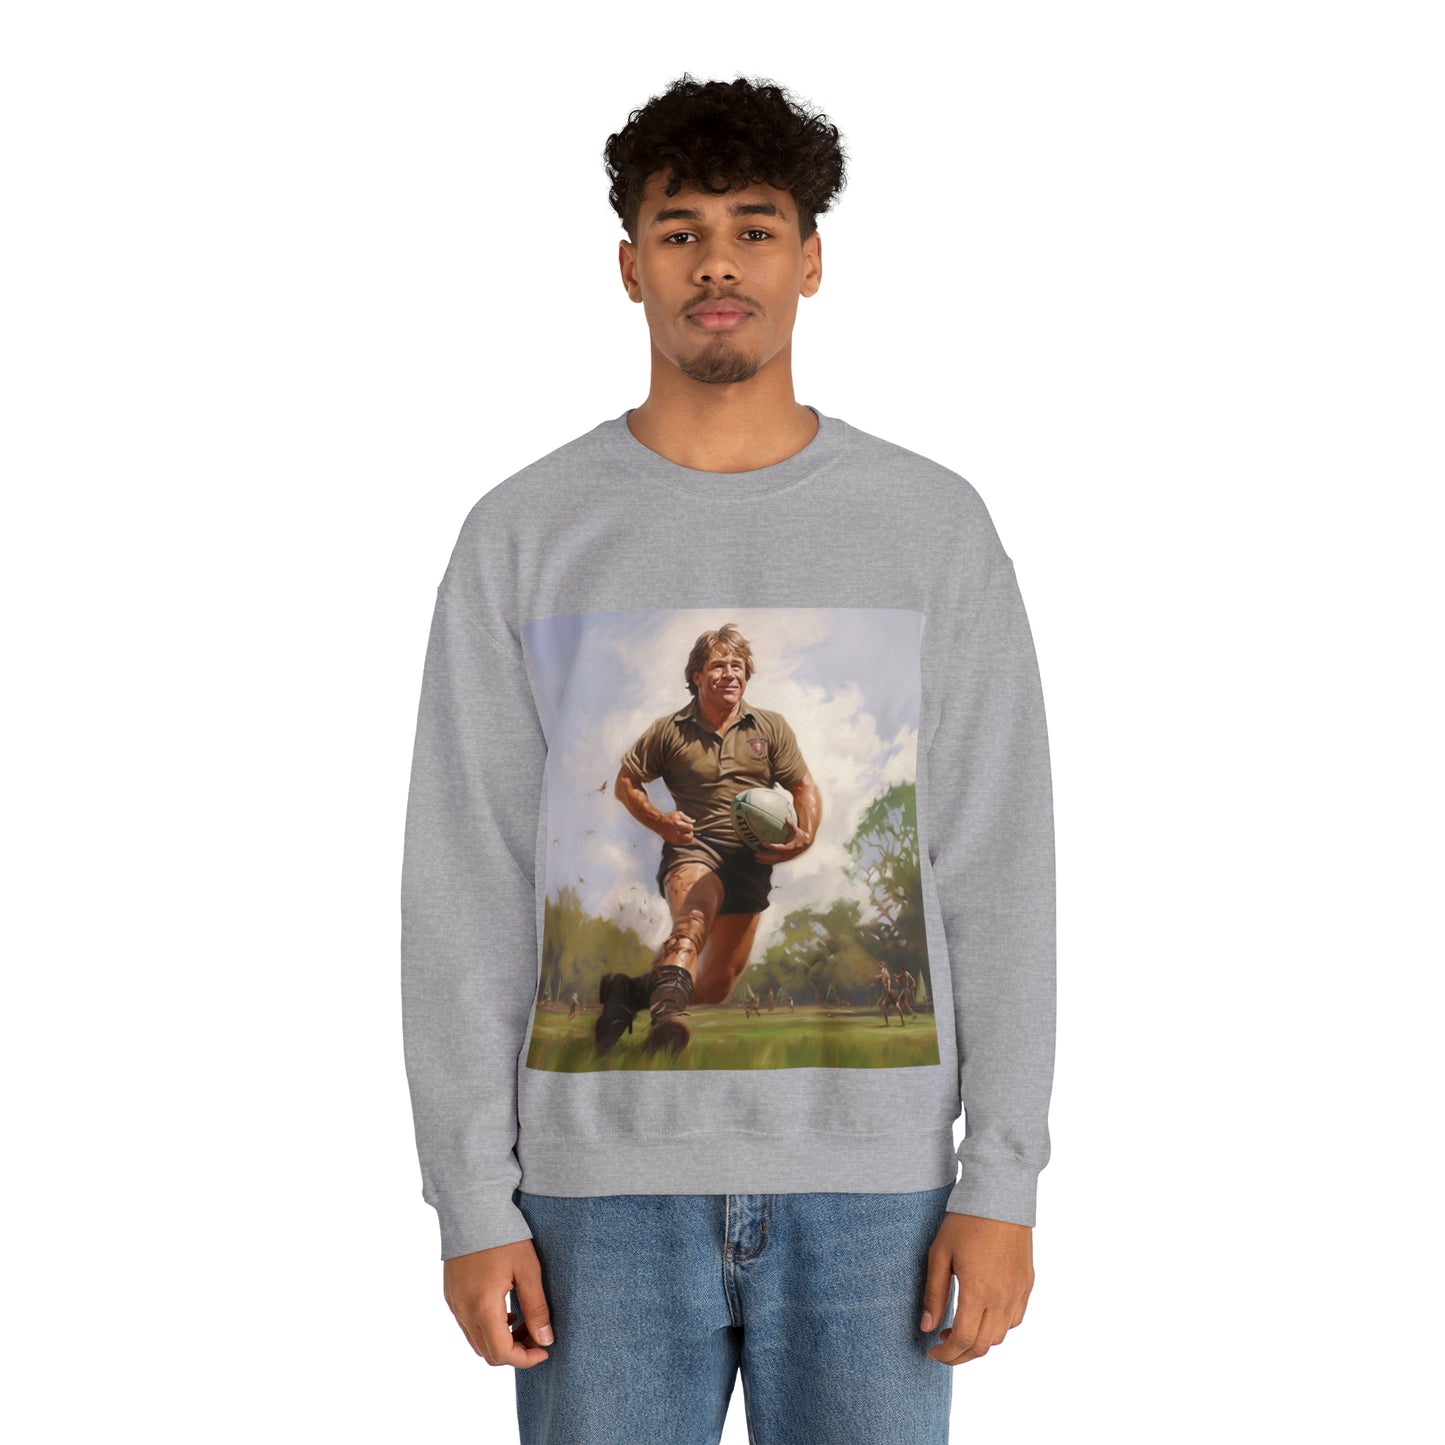 Steve Irwin 2 - light sweatshirts